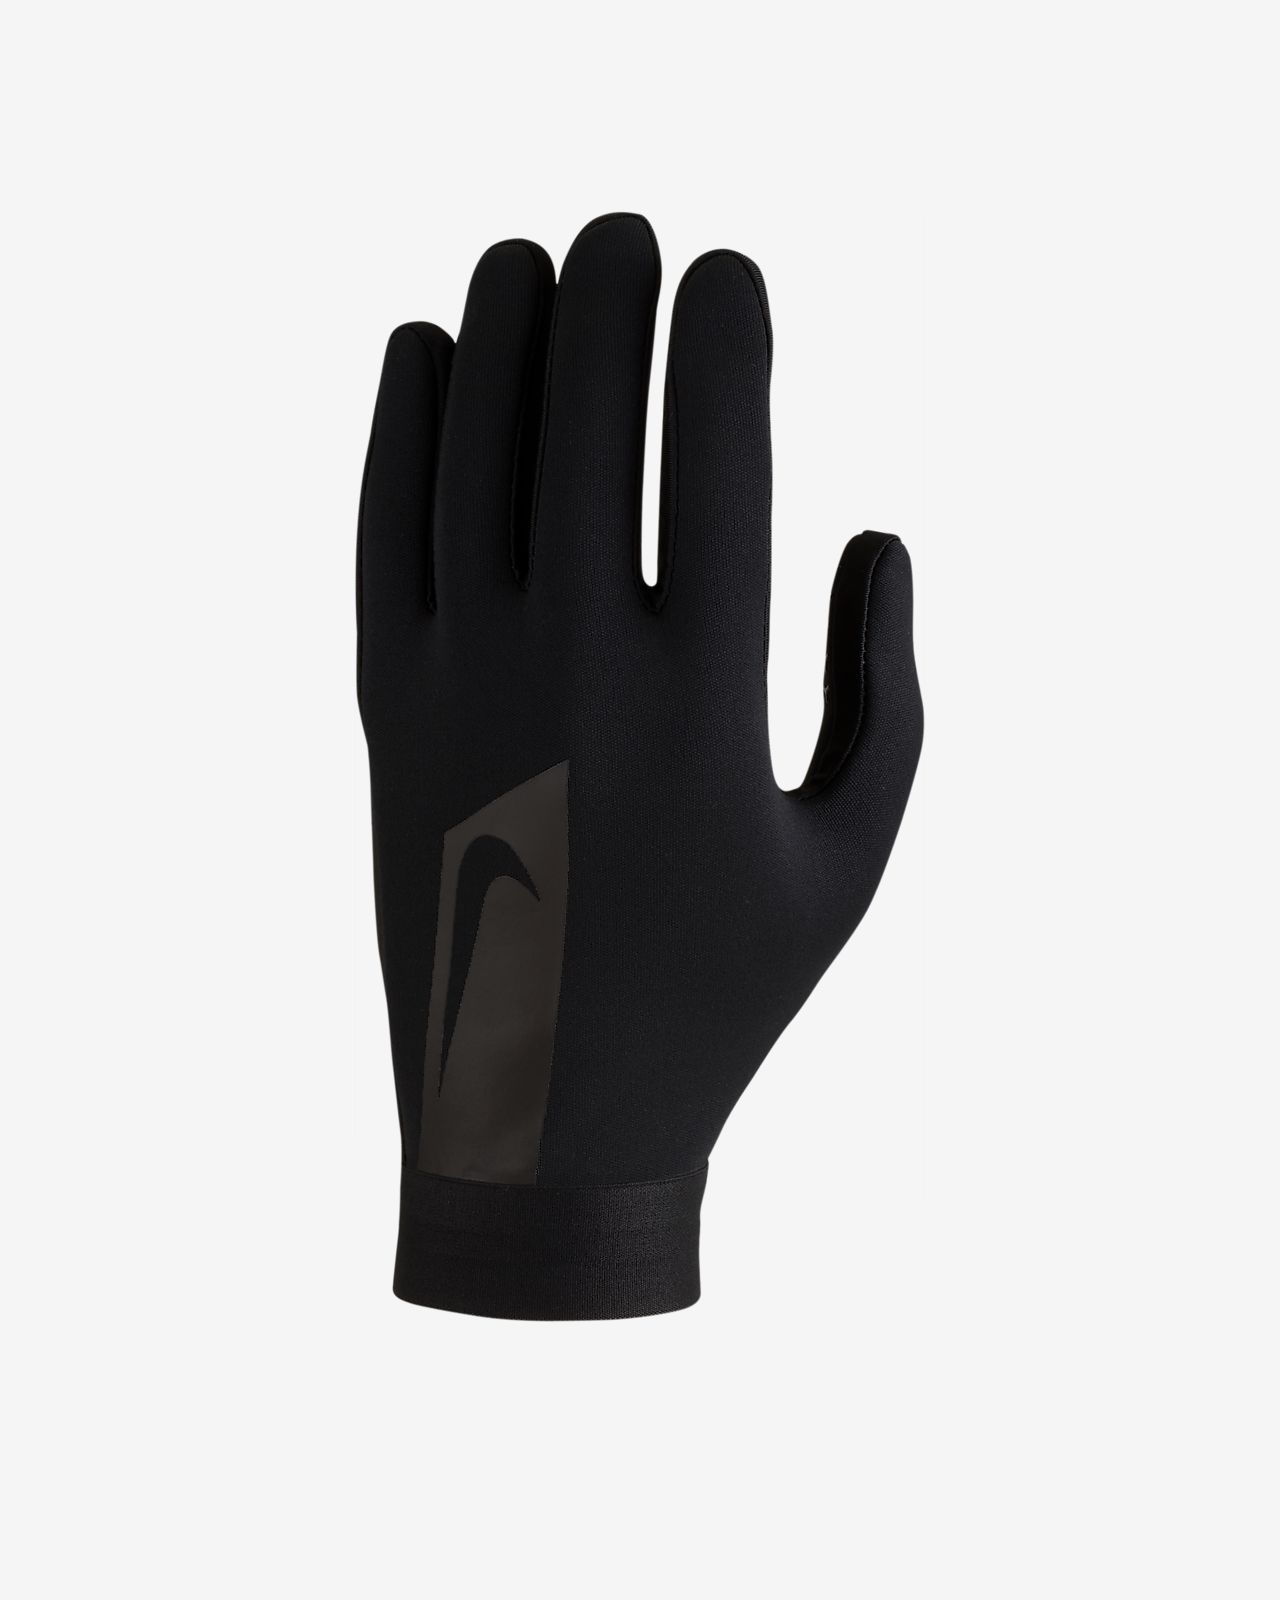 purple and black football gloves